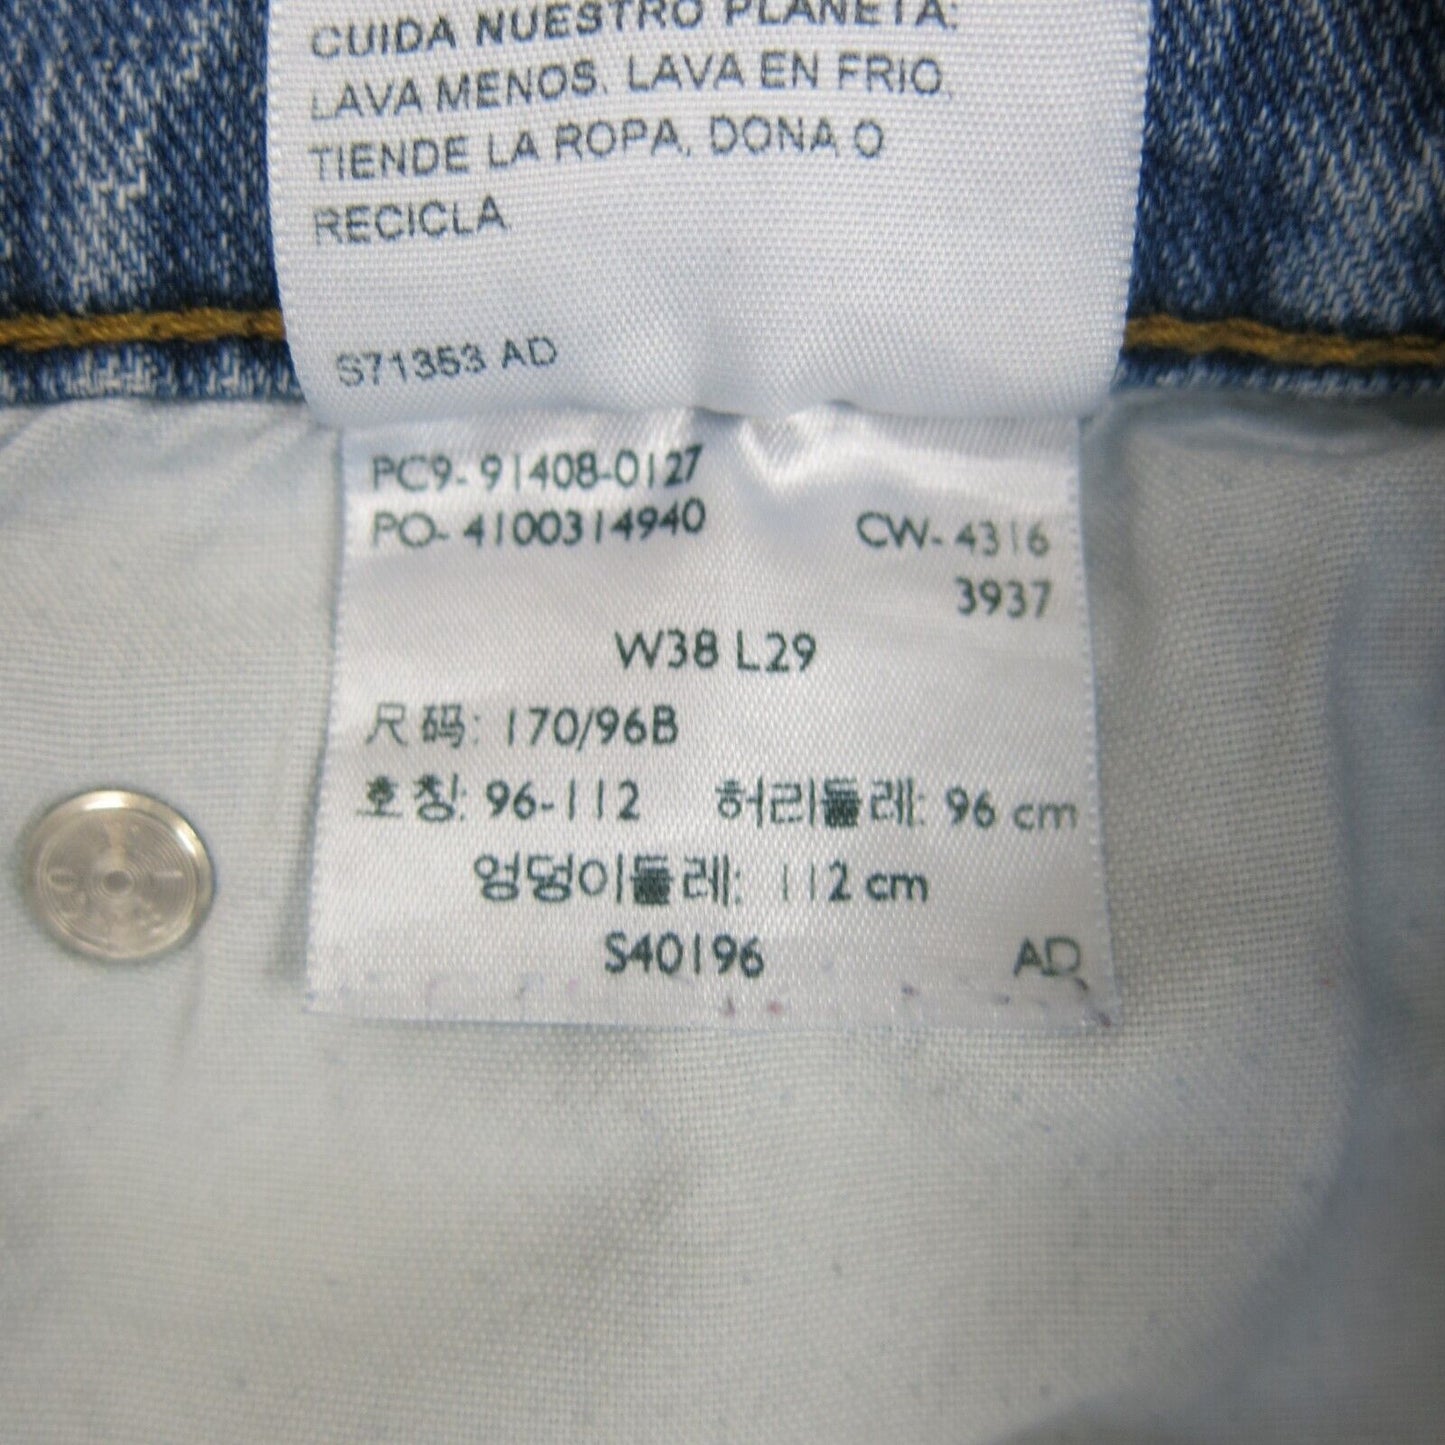 Levis Strauss & Co Mens Wide Leg Jeans Mid Rise 99% Cotton Blue Size W38XL29